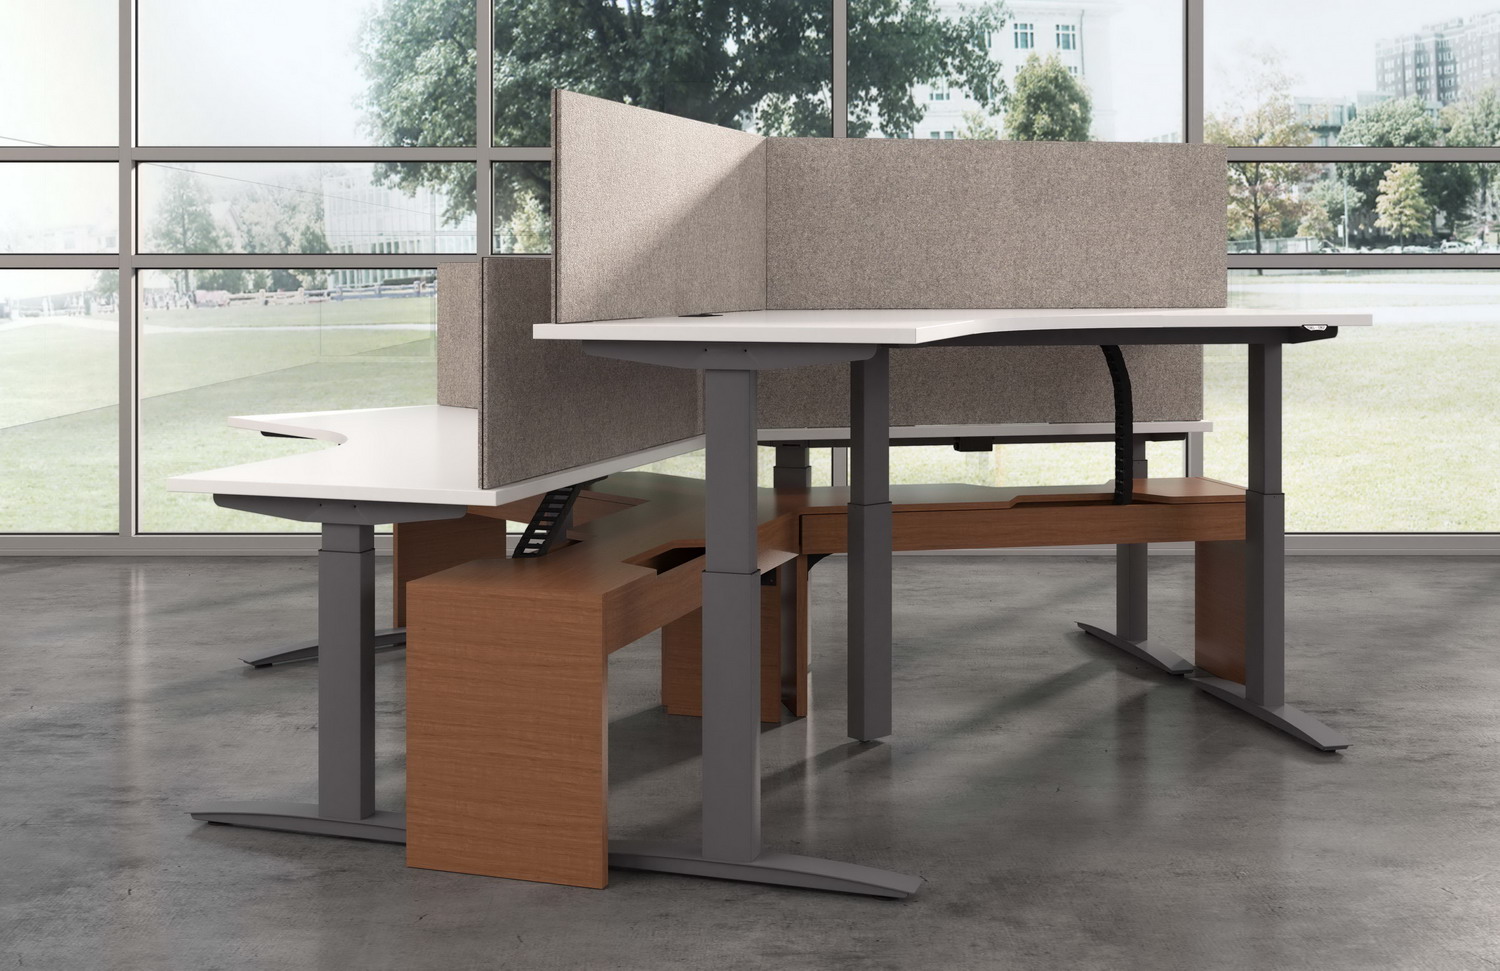 Contract Furniture Rendering of a 3 plex height adjustable desk.